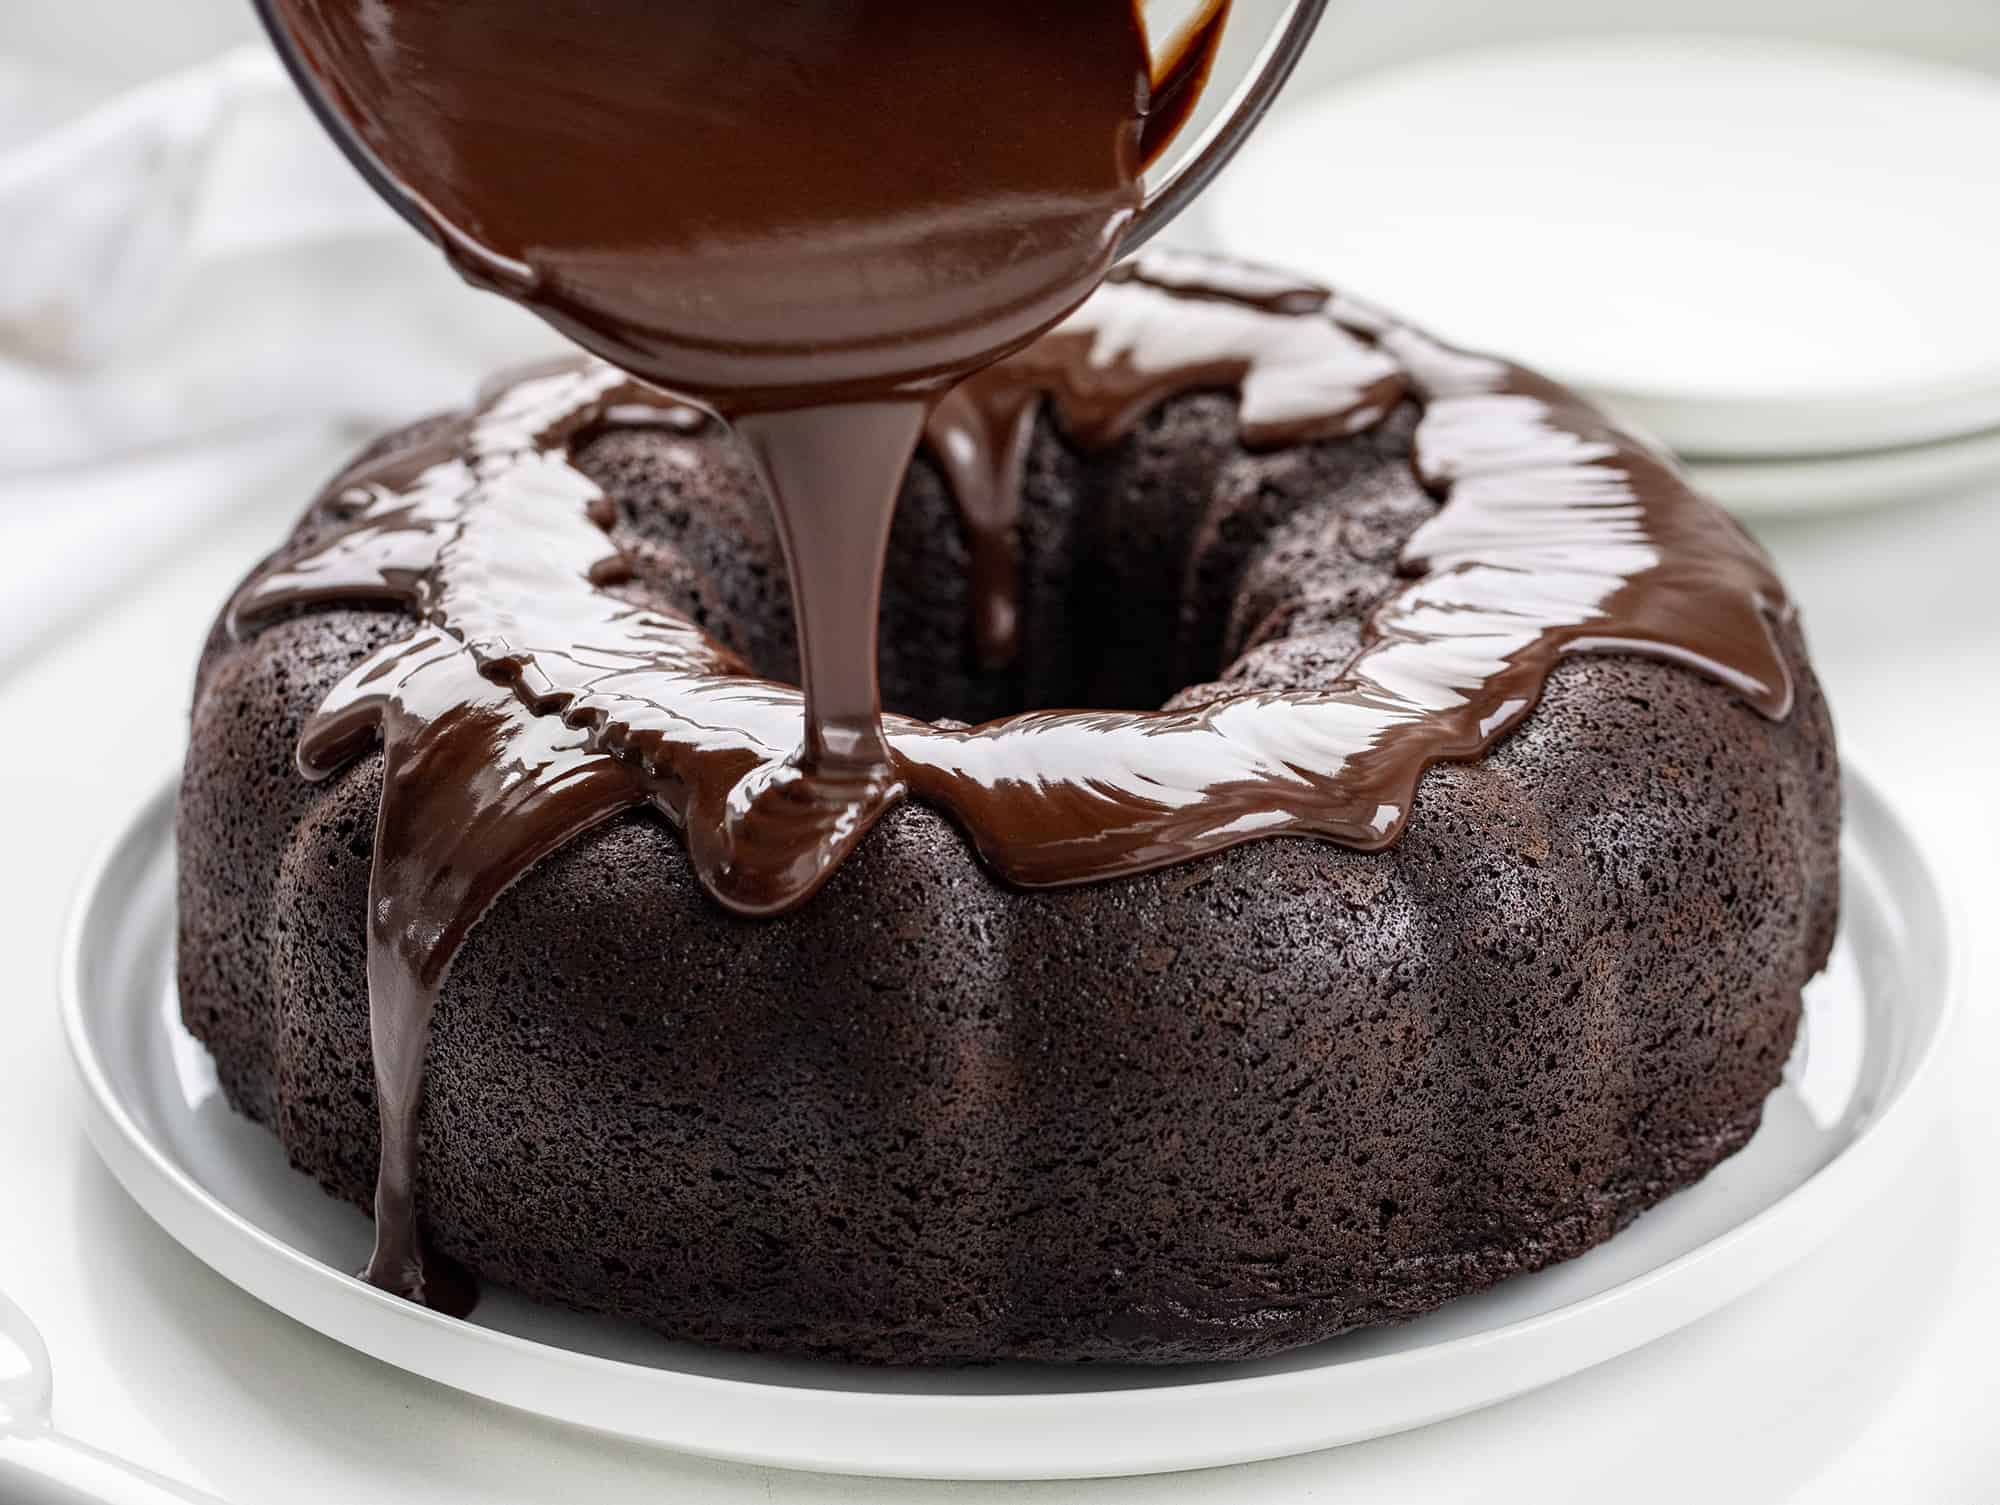 Adding Ganache to Chocolate Bundt Cake